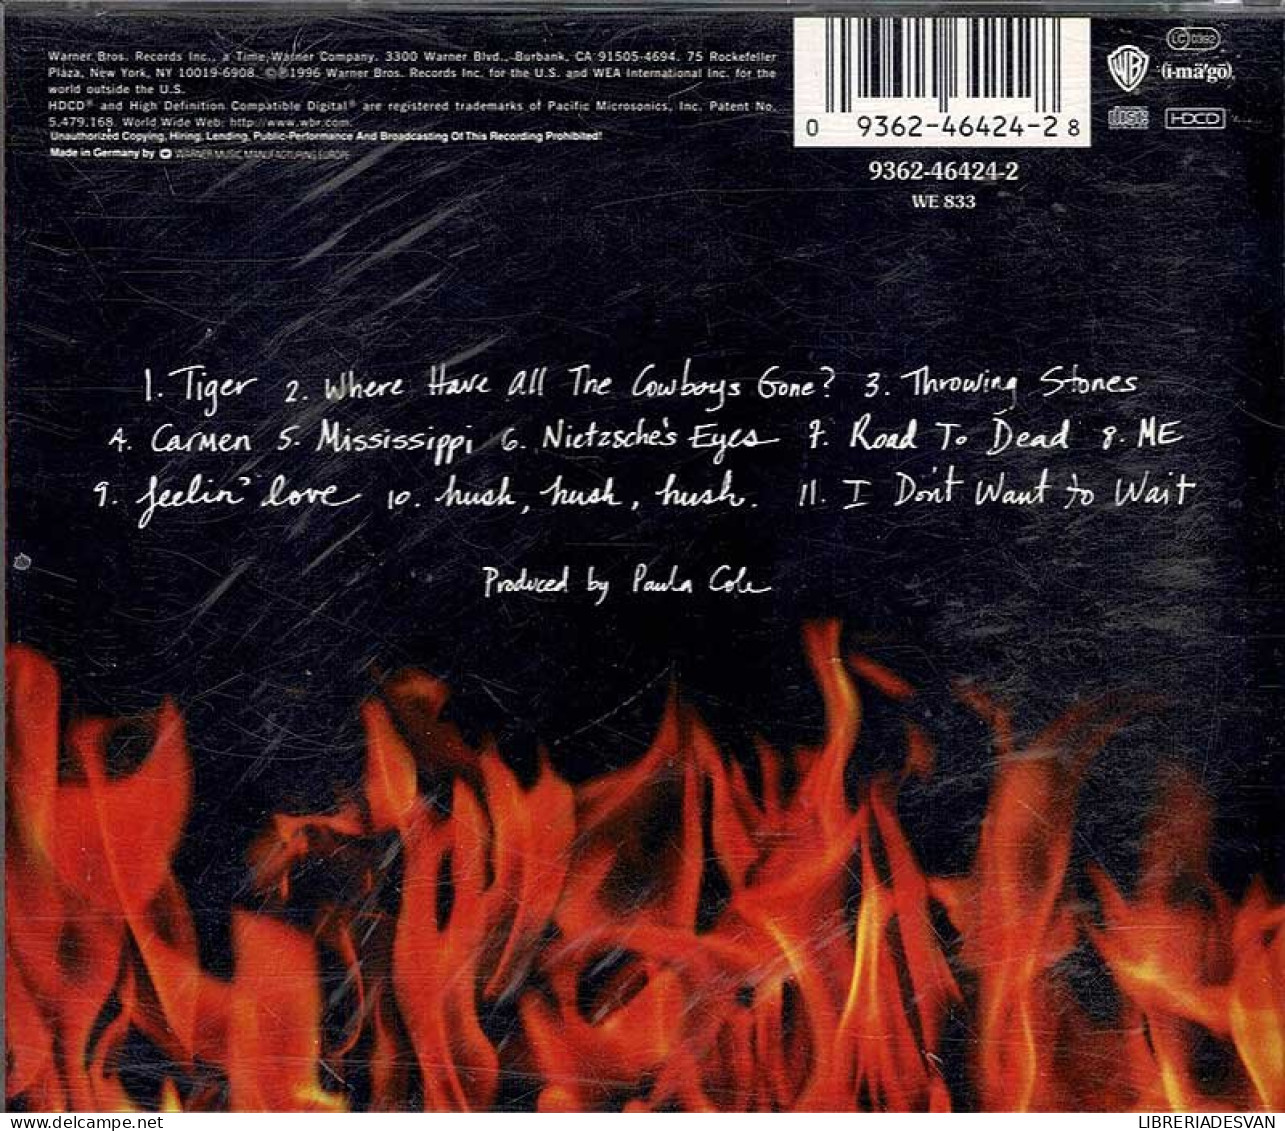 Paula Cole - This Fire. CD - Disco & Pop